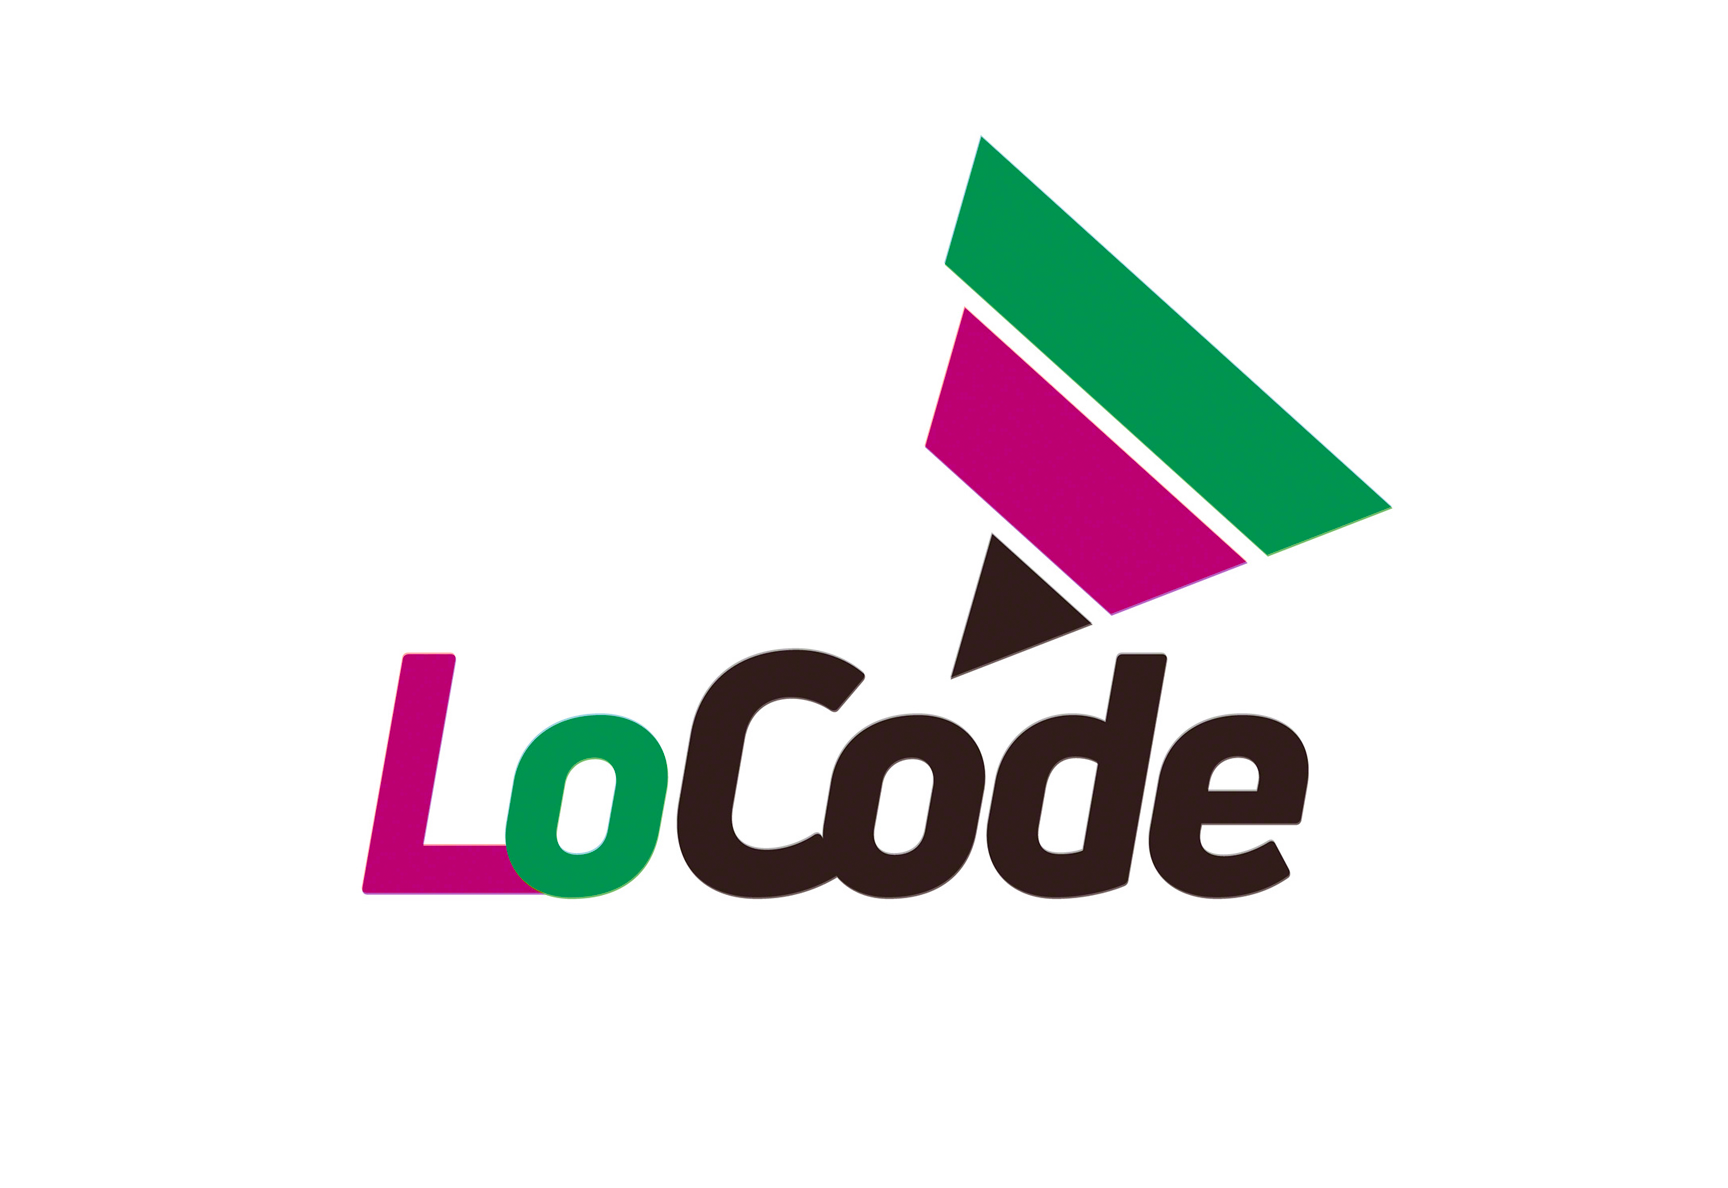 LoCode logo